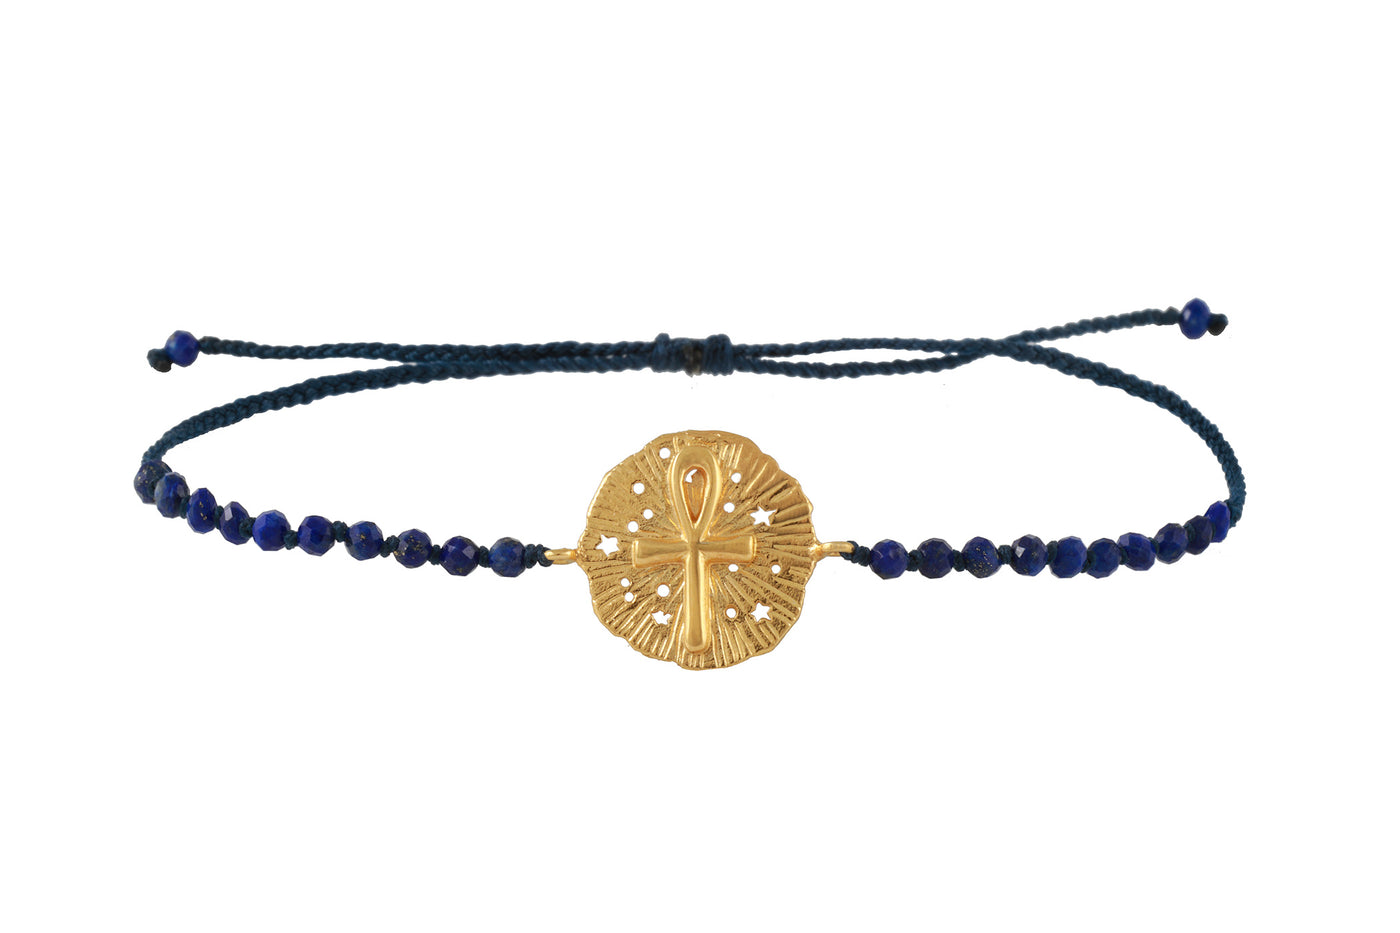 Ankh medallion amulet bracelet with beads. Gold plated